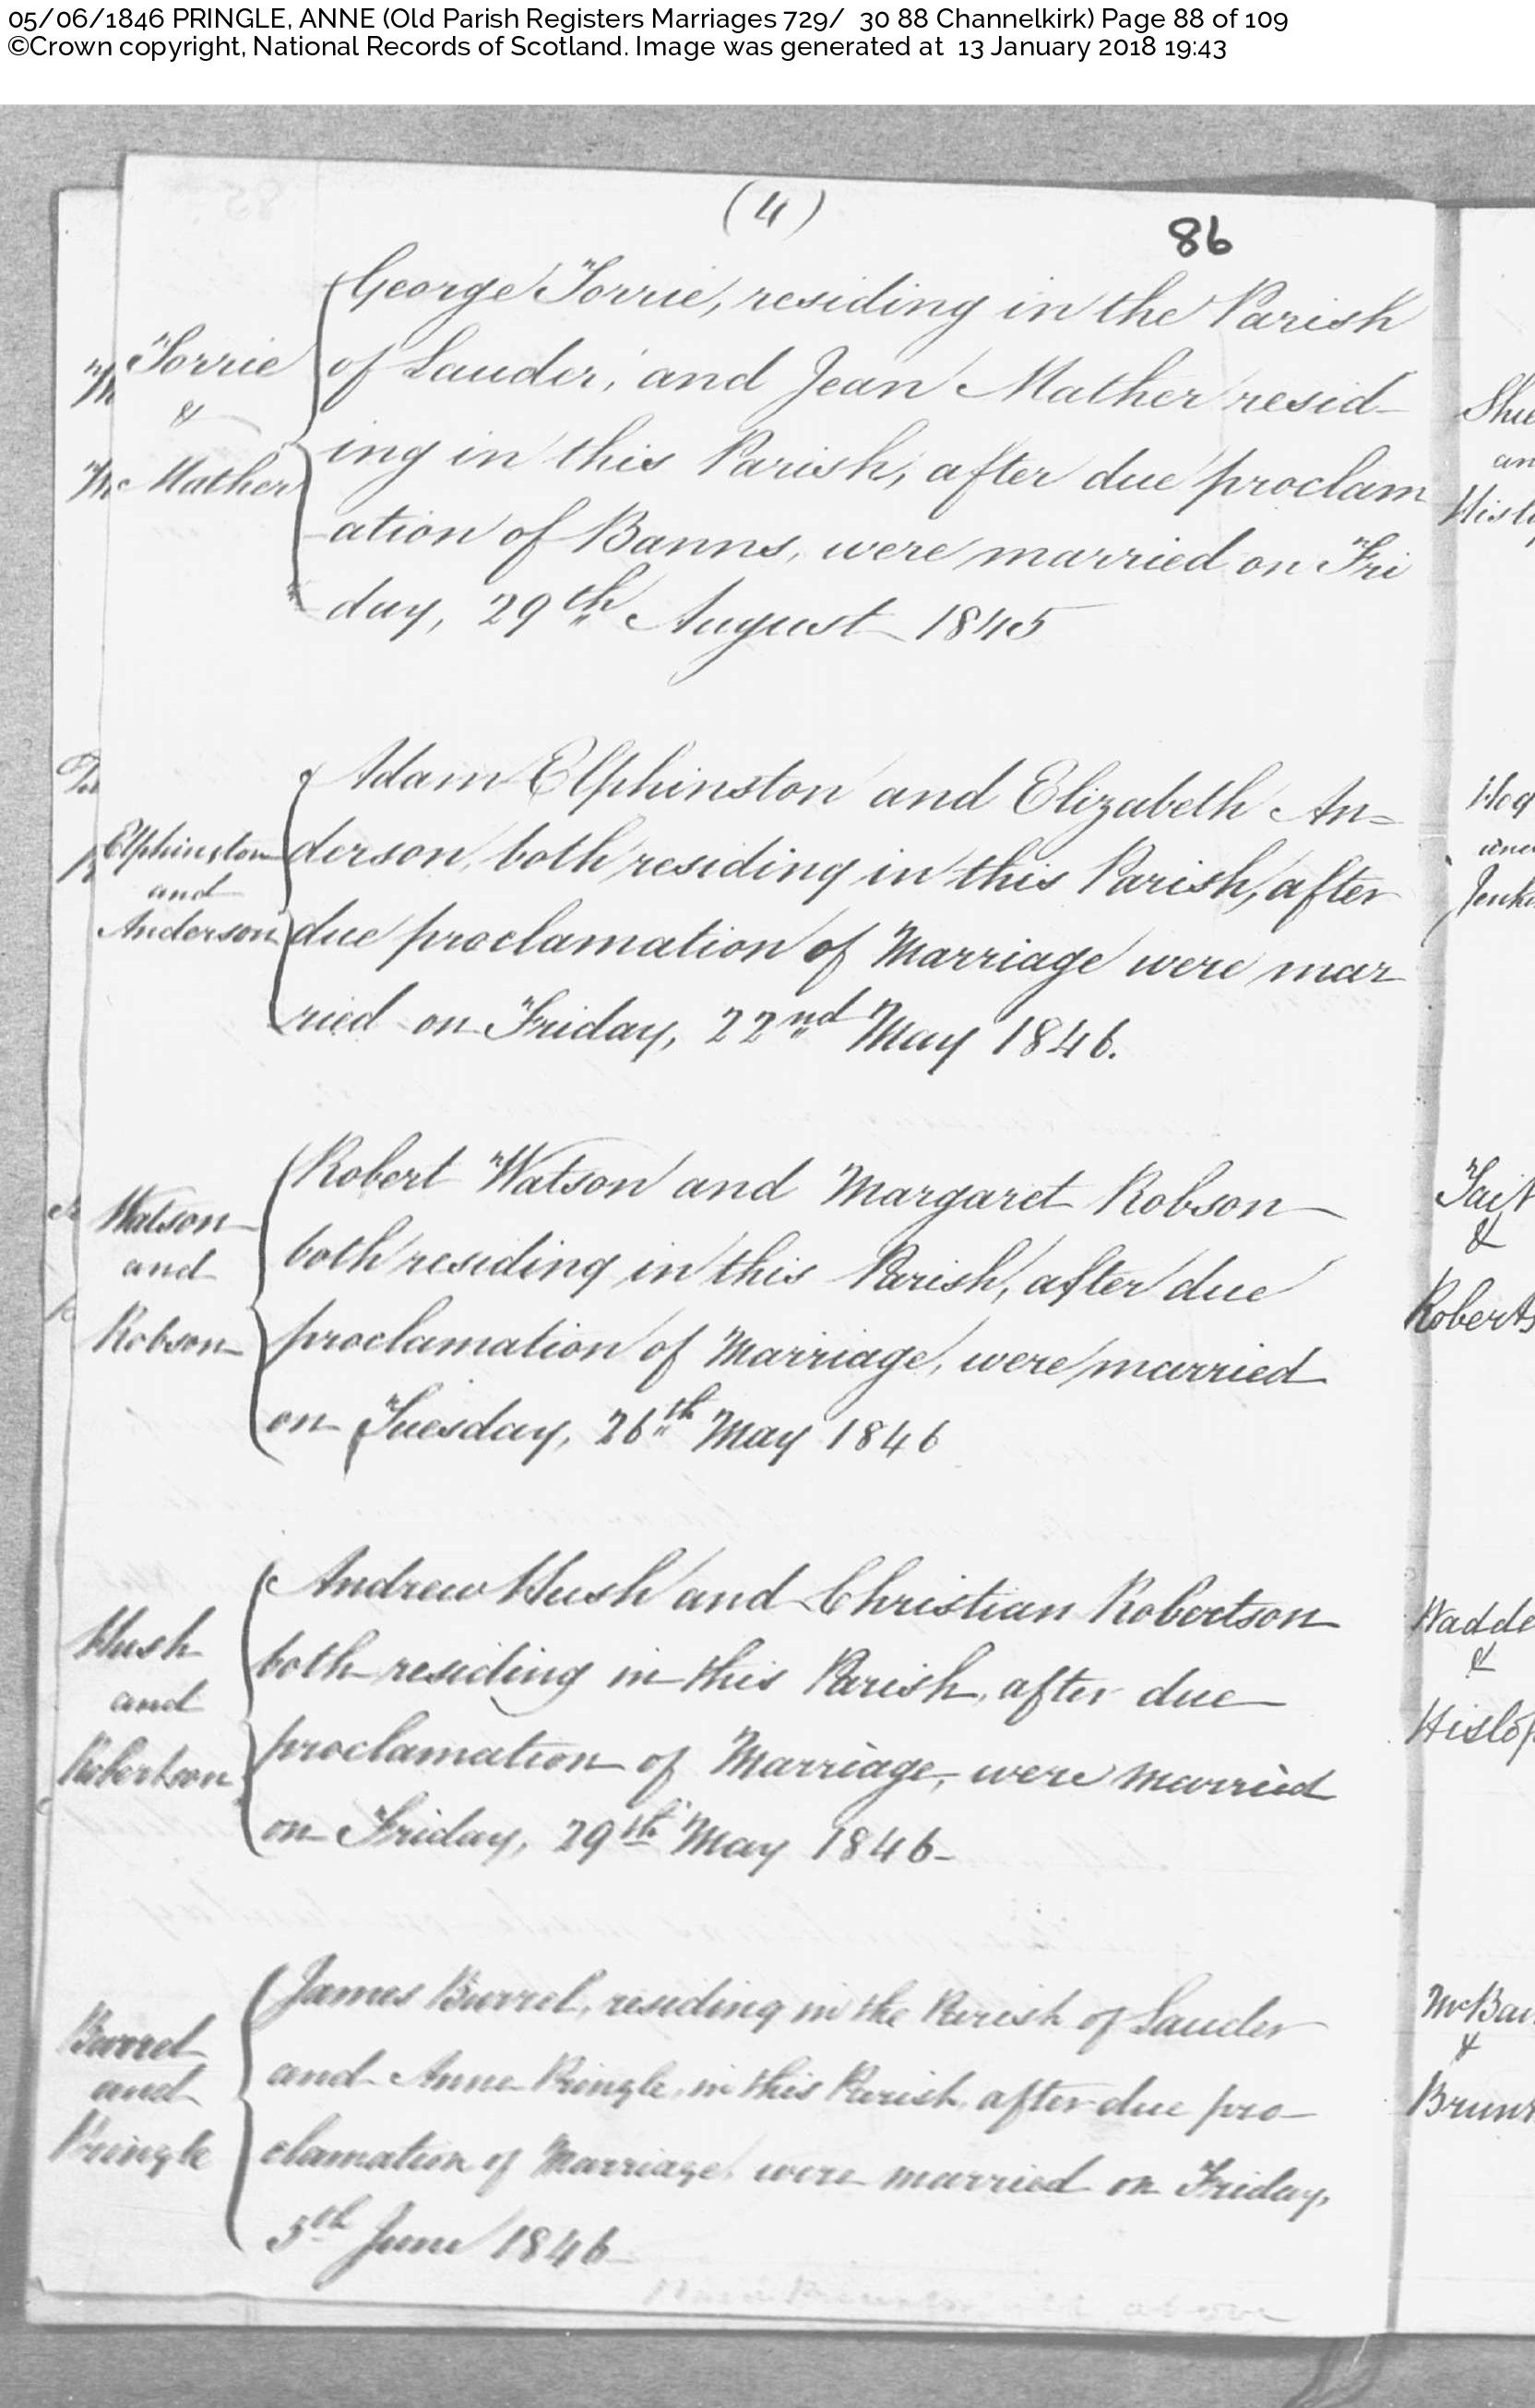 JamesBurrellAnnePringle_M1846 Channelkirk, June 5, 1846